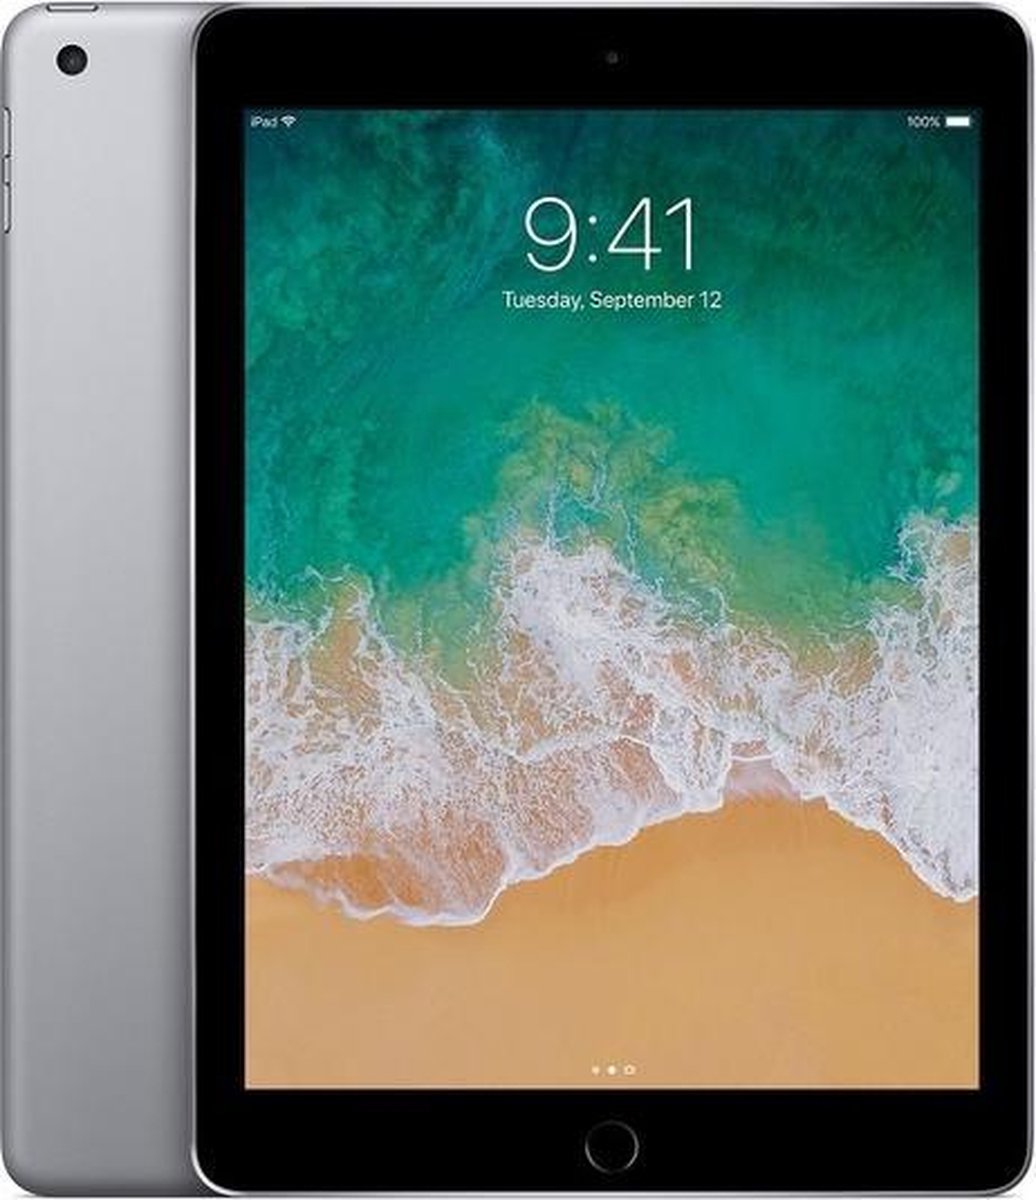 meesteres Schipbreuk Paradox Apple iPad (2017) - 9.7 inch - WiFi - 32GB - Spacegrijs | bol.com